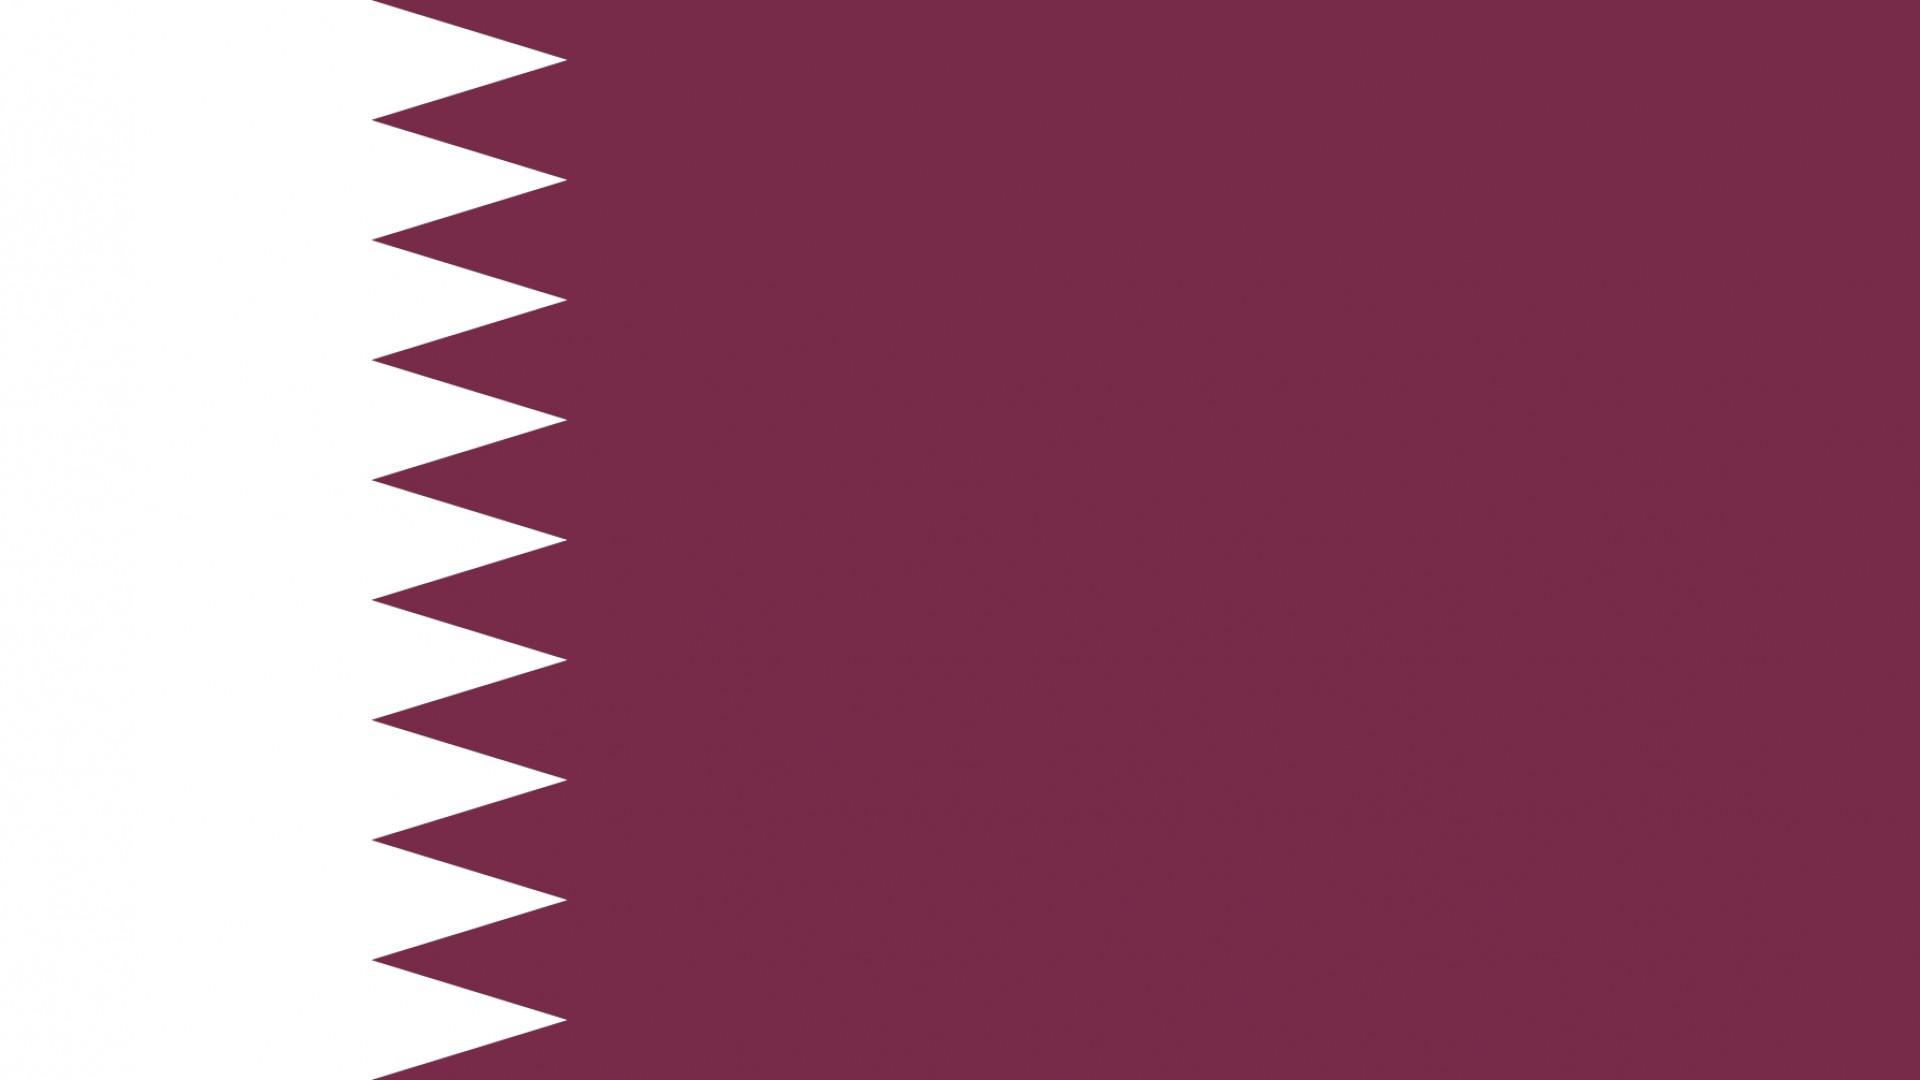 Qatar Flag HD Wallpaper, Backgrounds Image